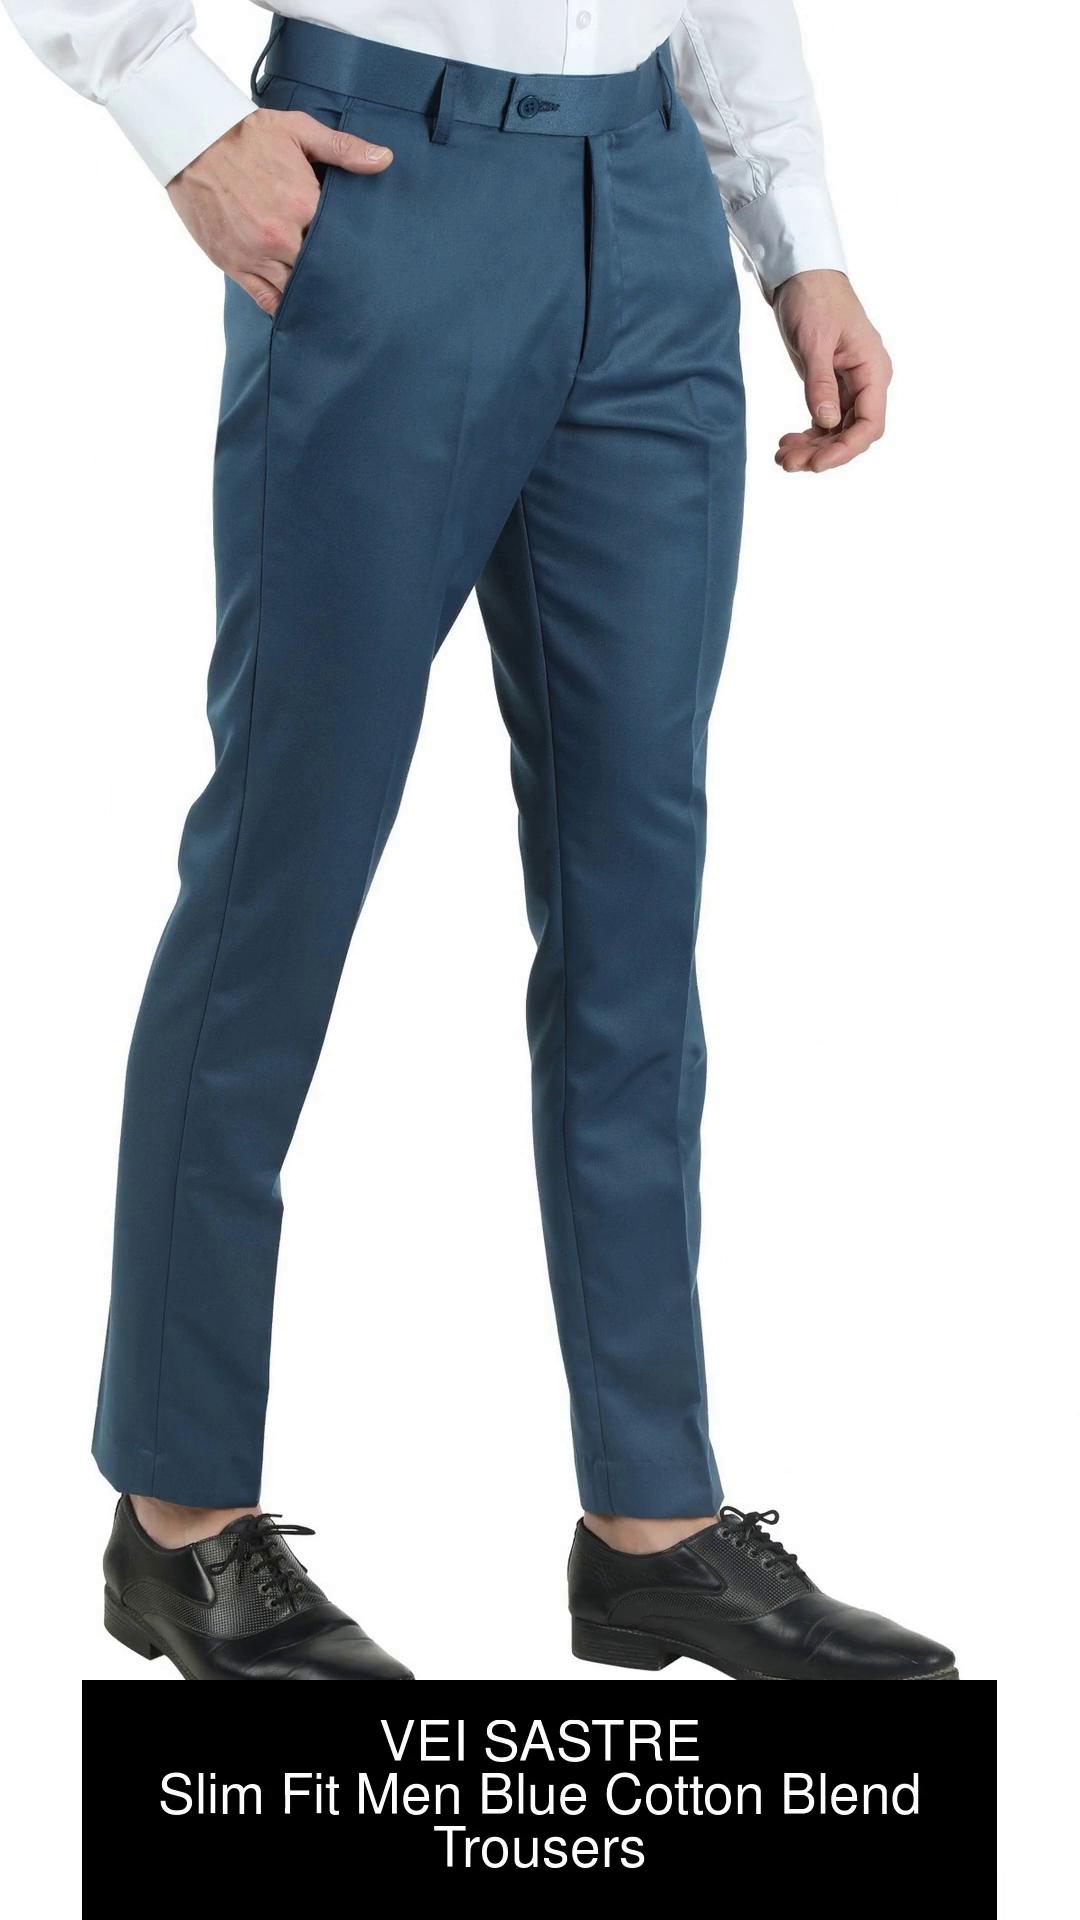 Mancrew Mens Slim Fit Formal Pant  Formal trousers Pack of 3 Black Blue  White